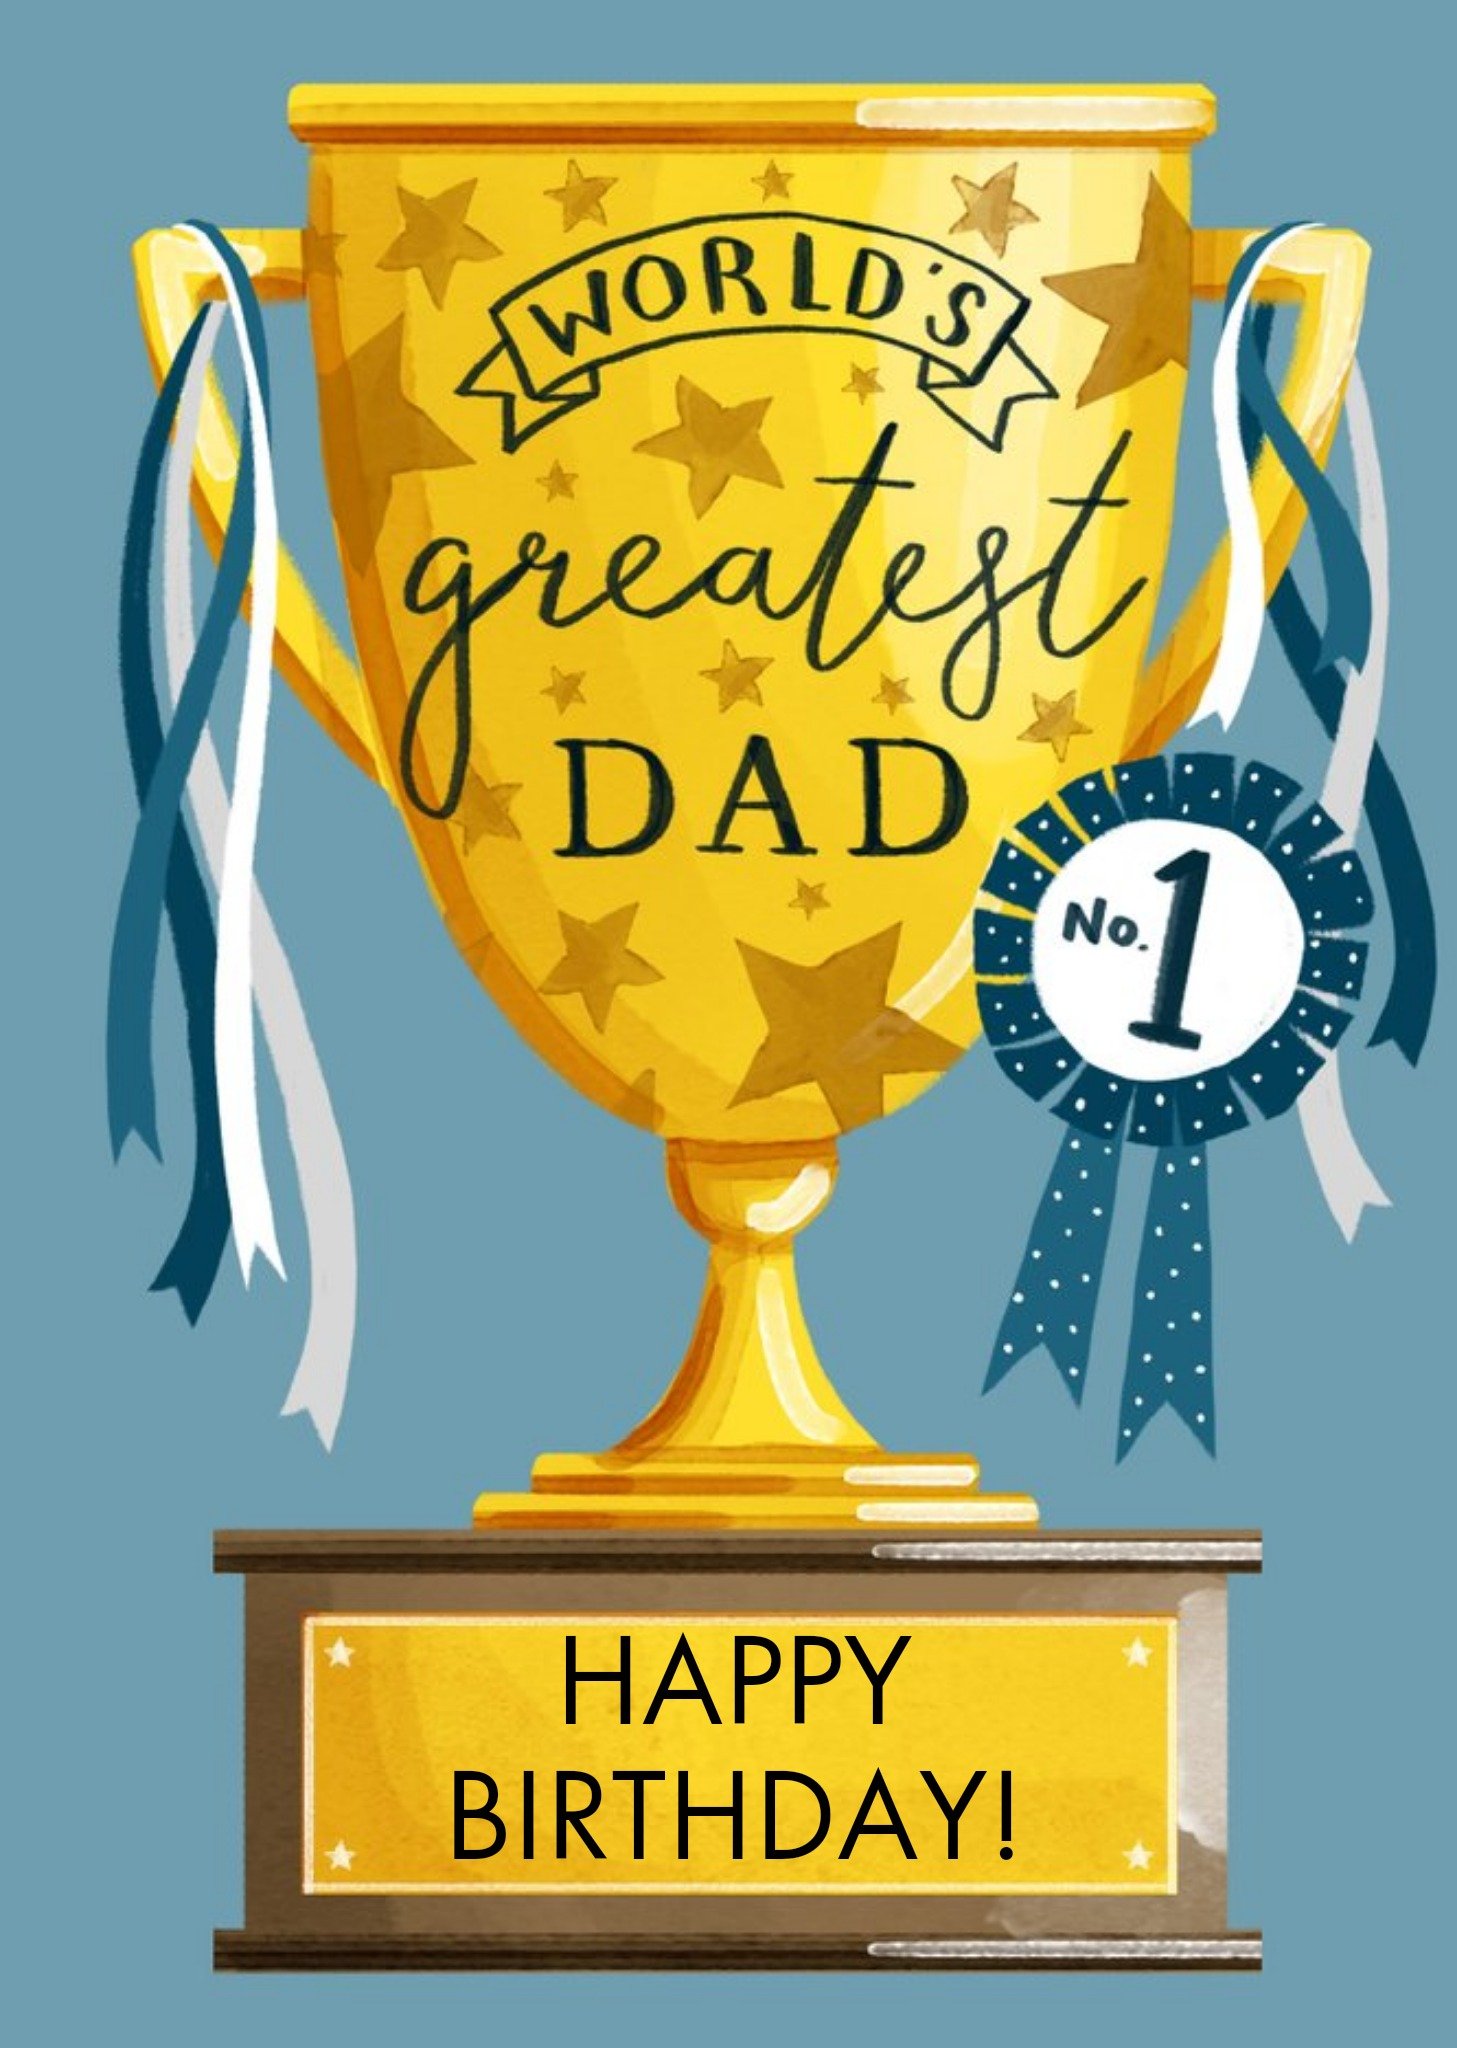 Okey Dokey Design Worlds Greatest Dad Trophy Illustration No.1 Birthday Card, Large